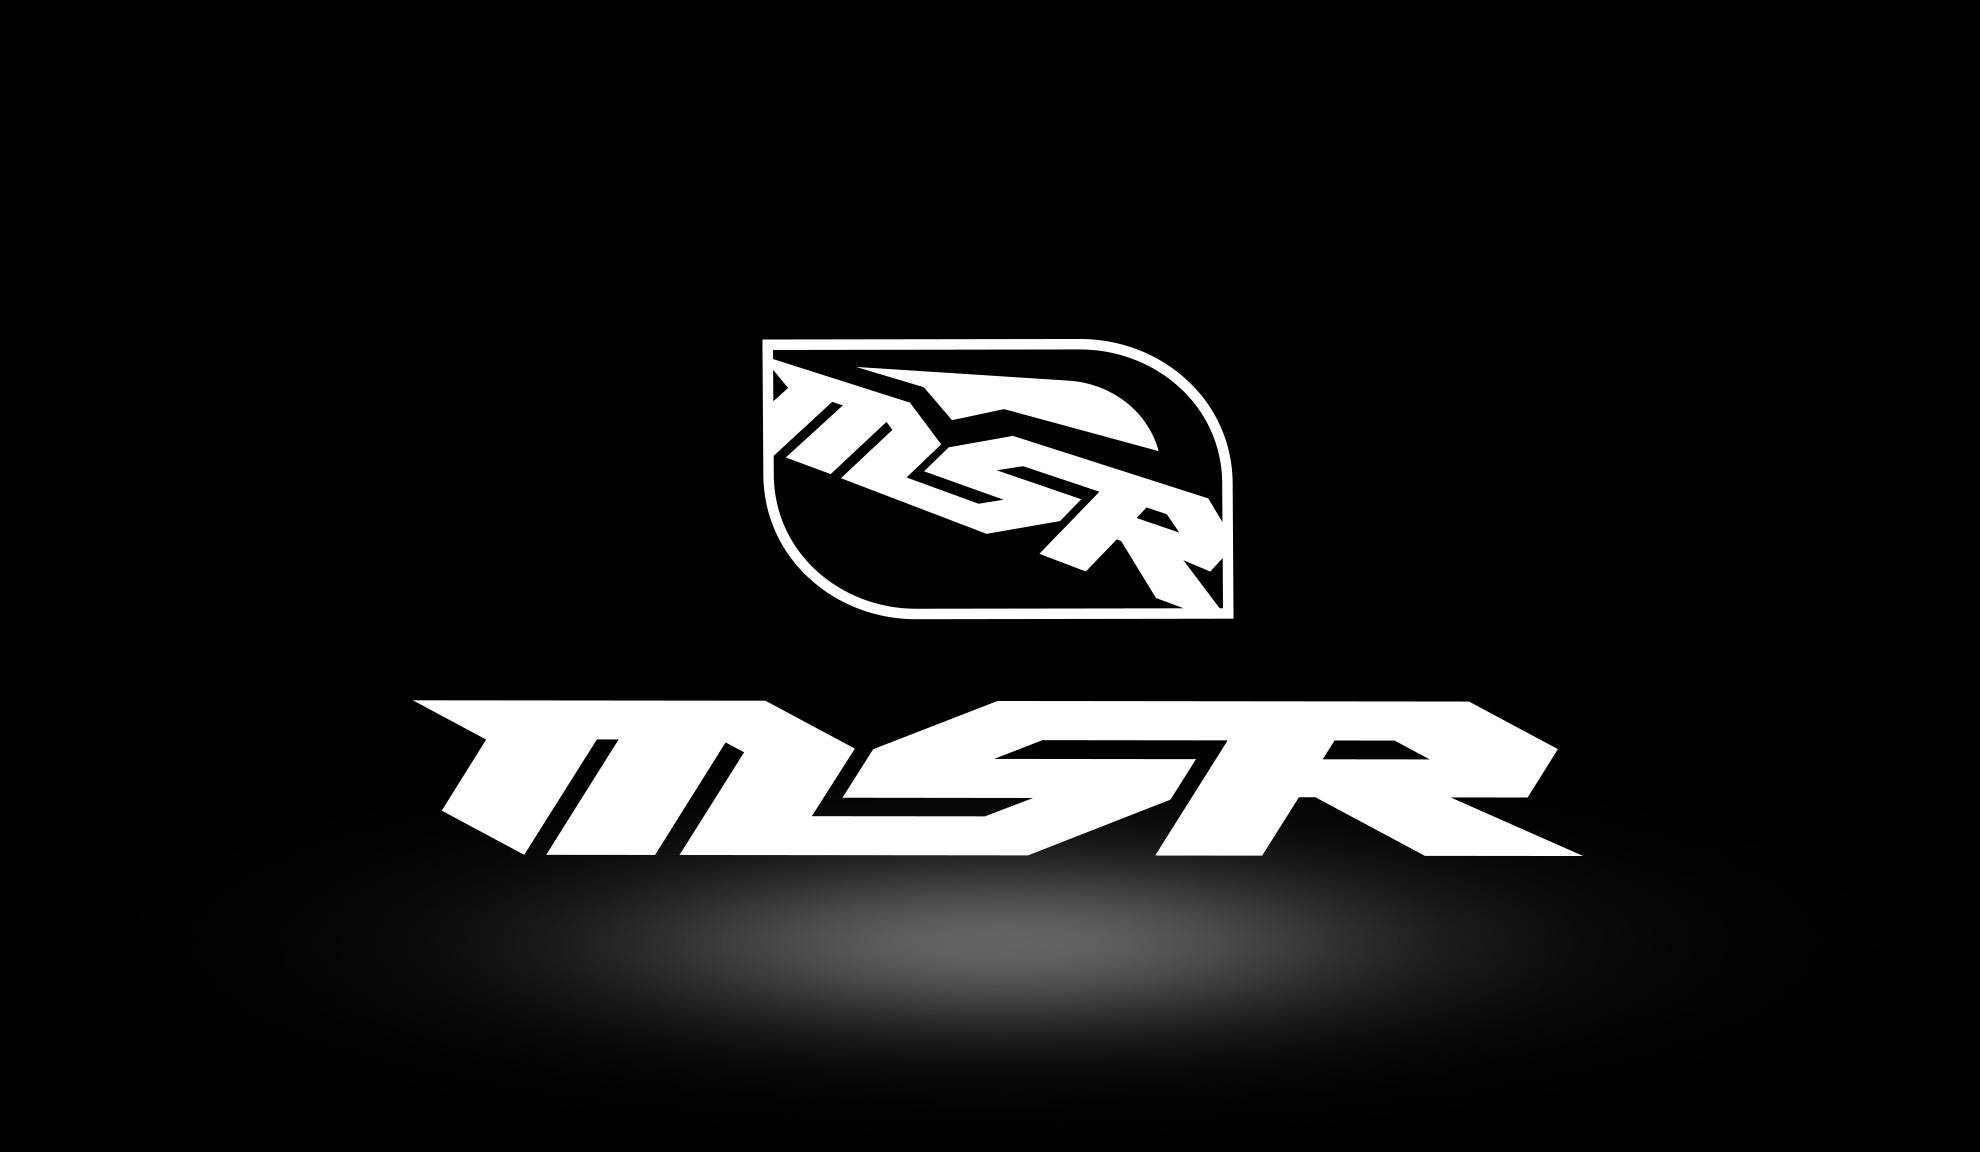 MSR Riding Gear